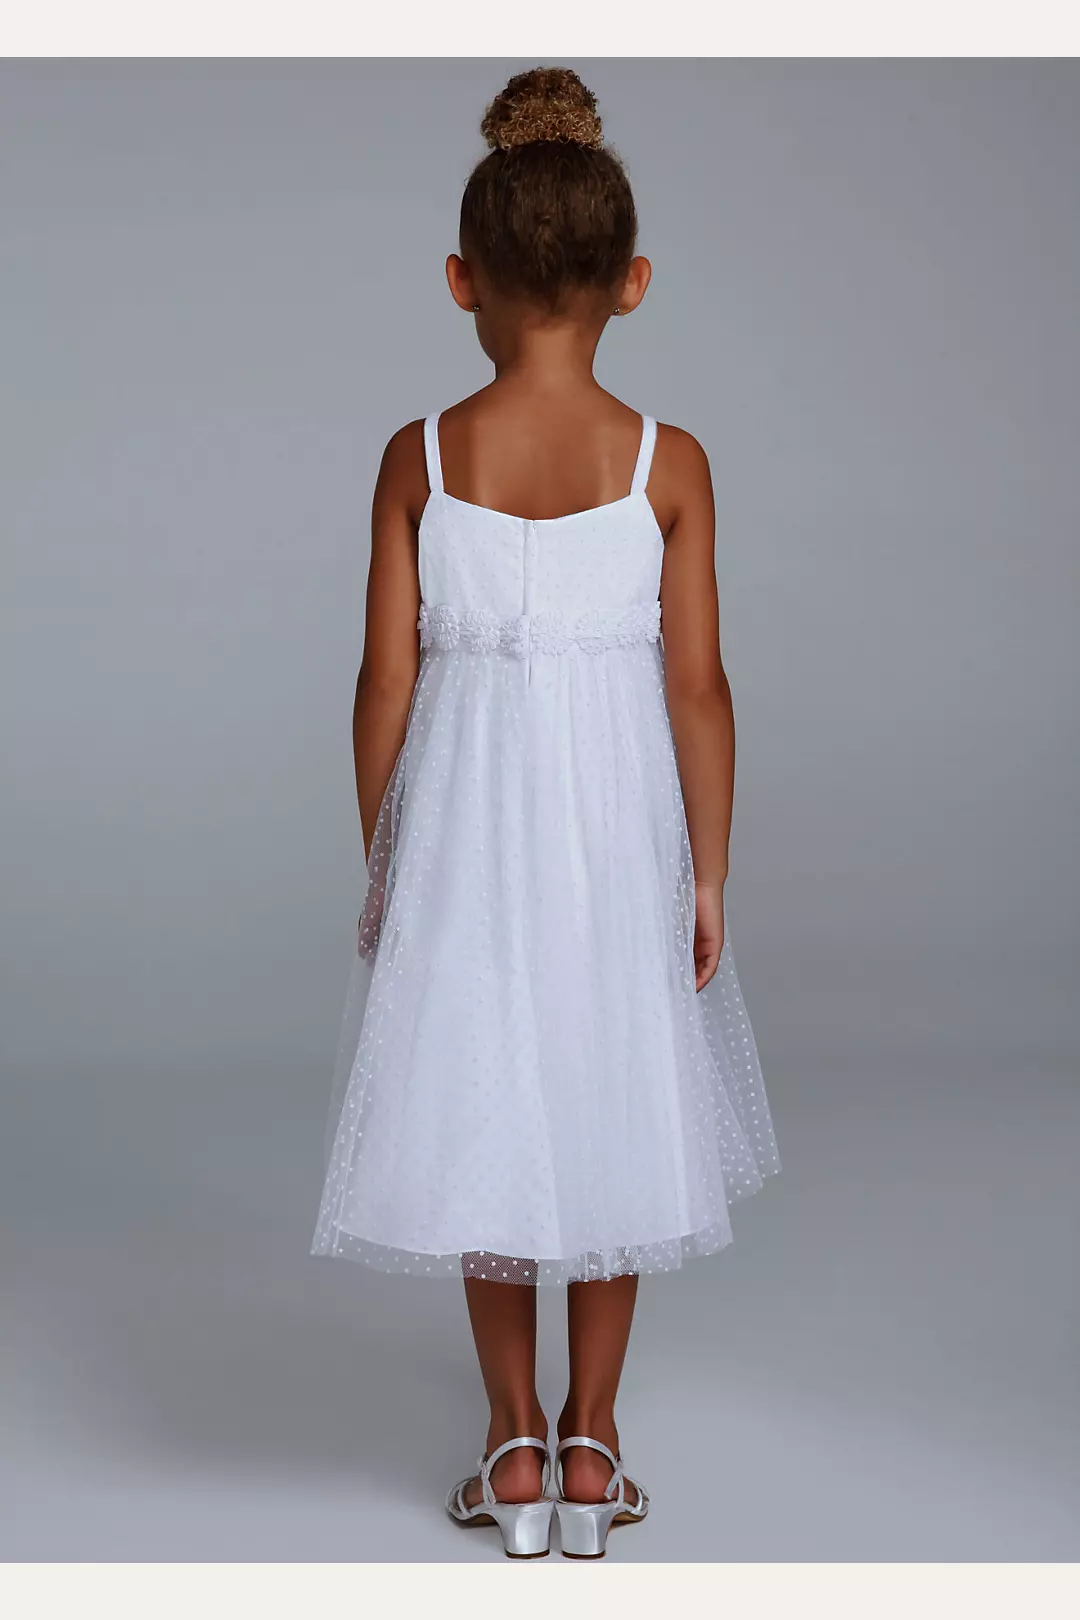 Dot Tulle Tea Length Dress with Rosettes Image 2